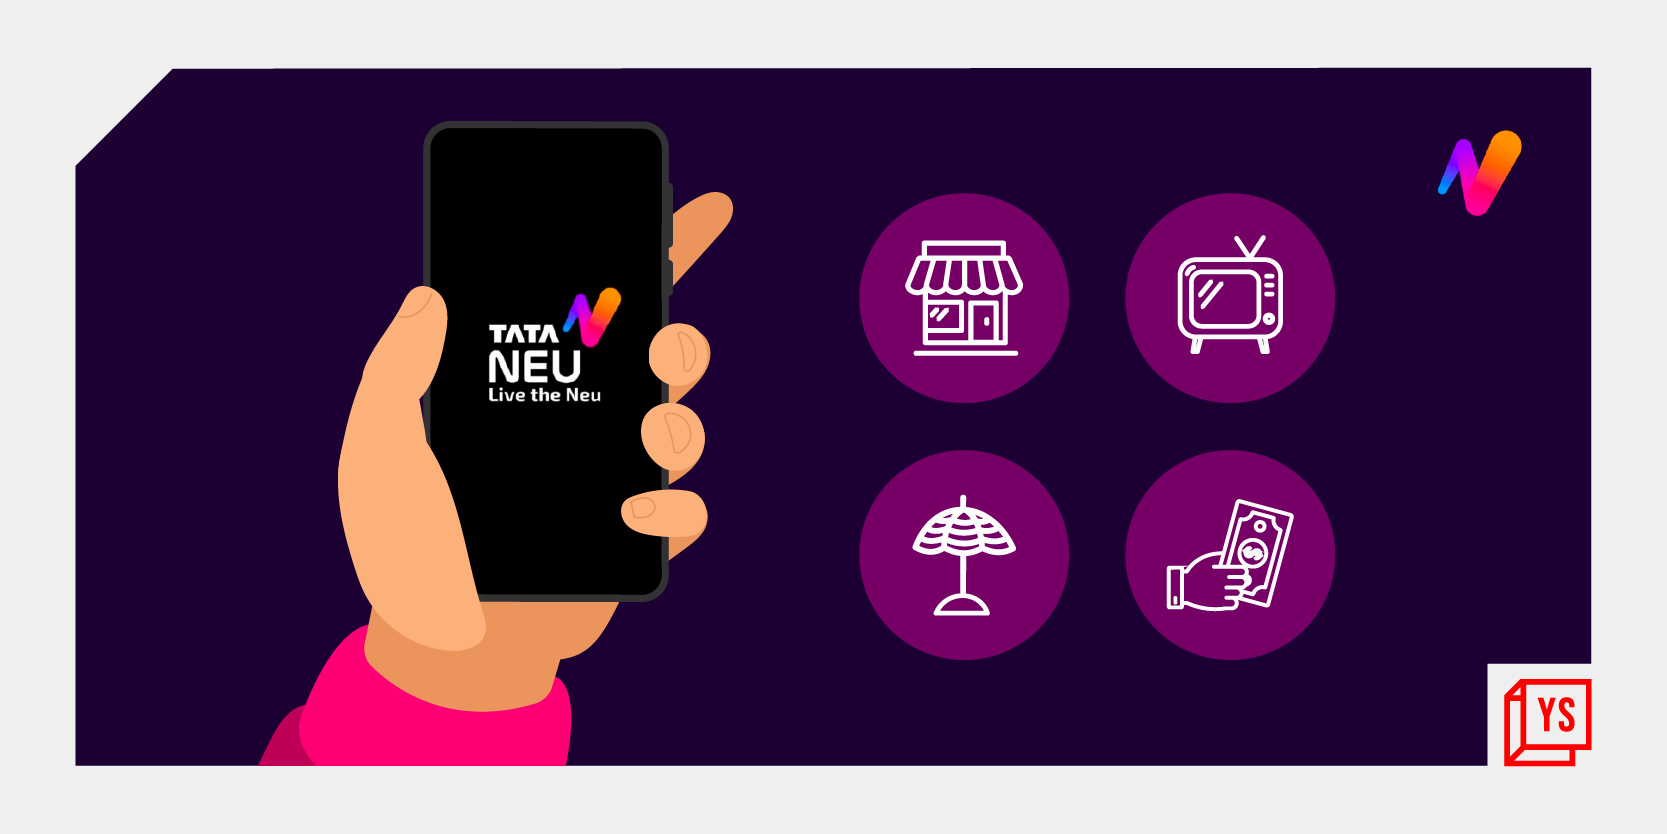 Tata Digital launches the super app ‘Tata Neu’